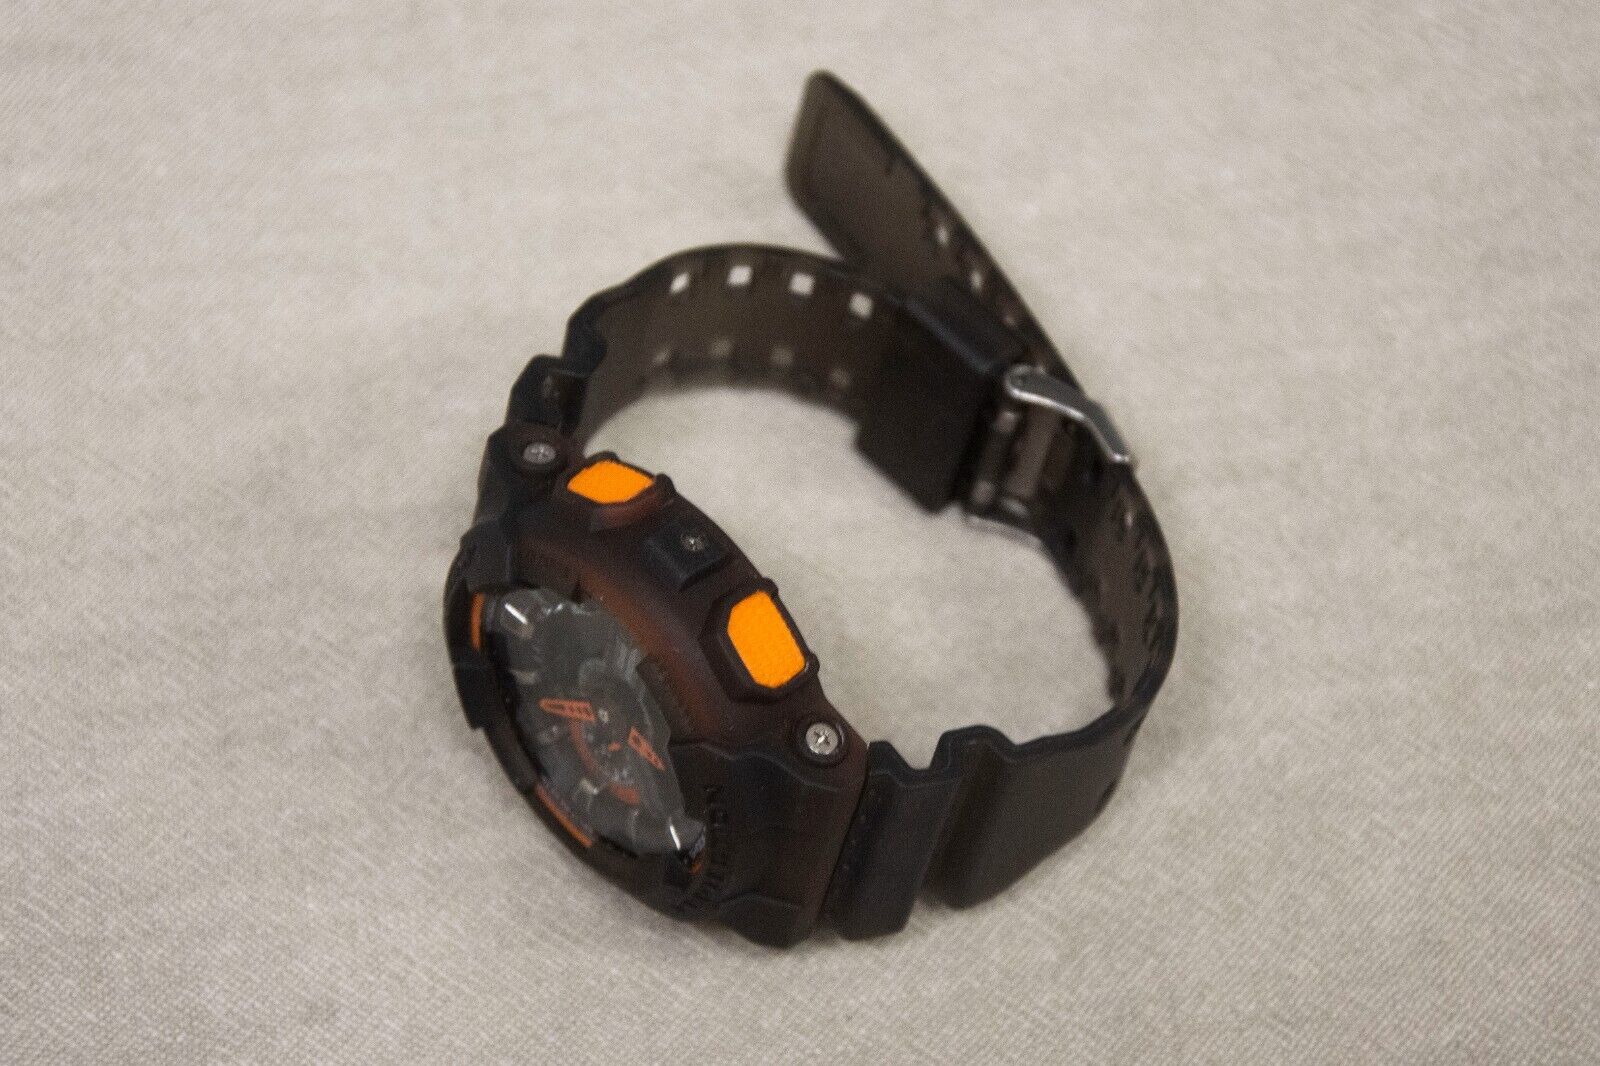 Casio Watch G-Shock GA-110GB Orange and Transparent Black 5146